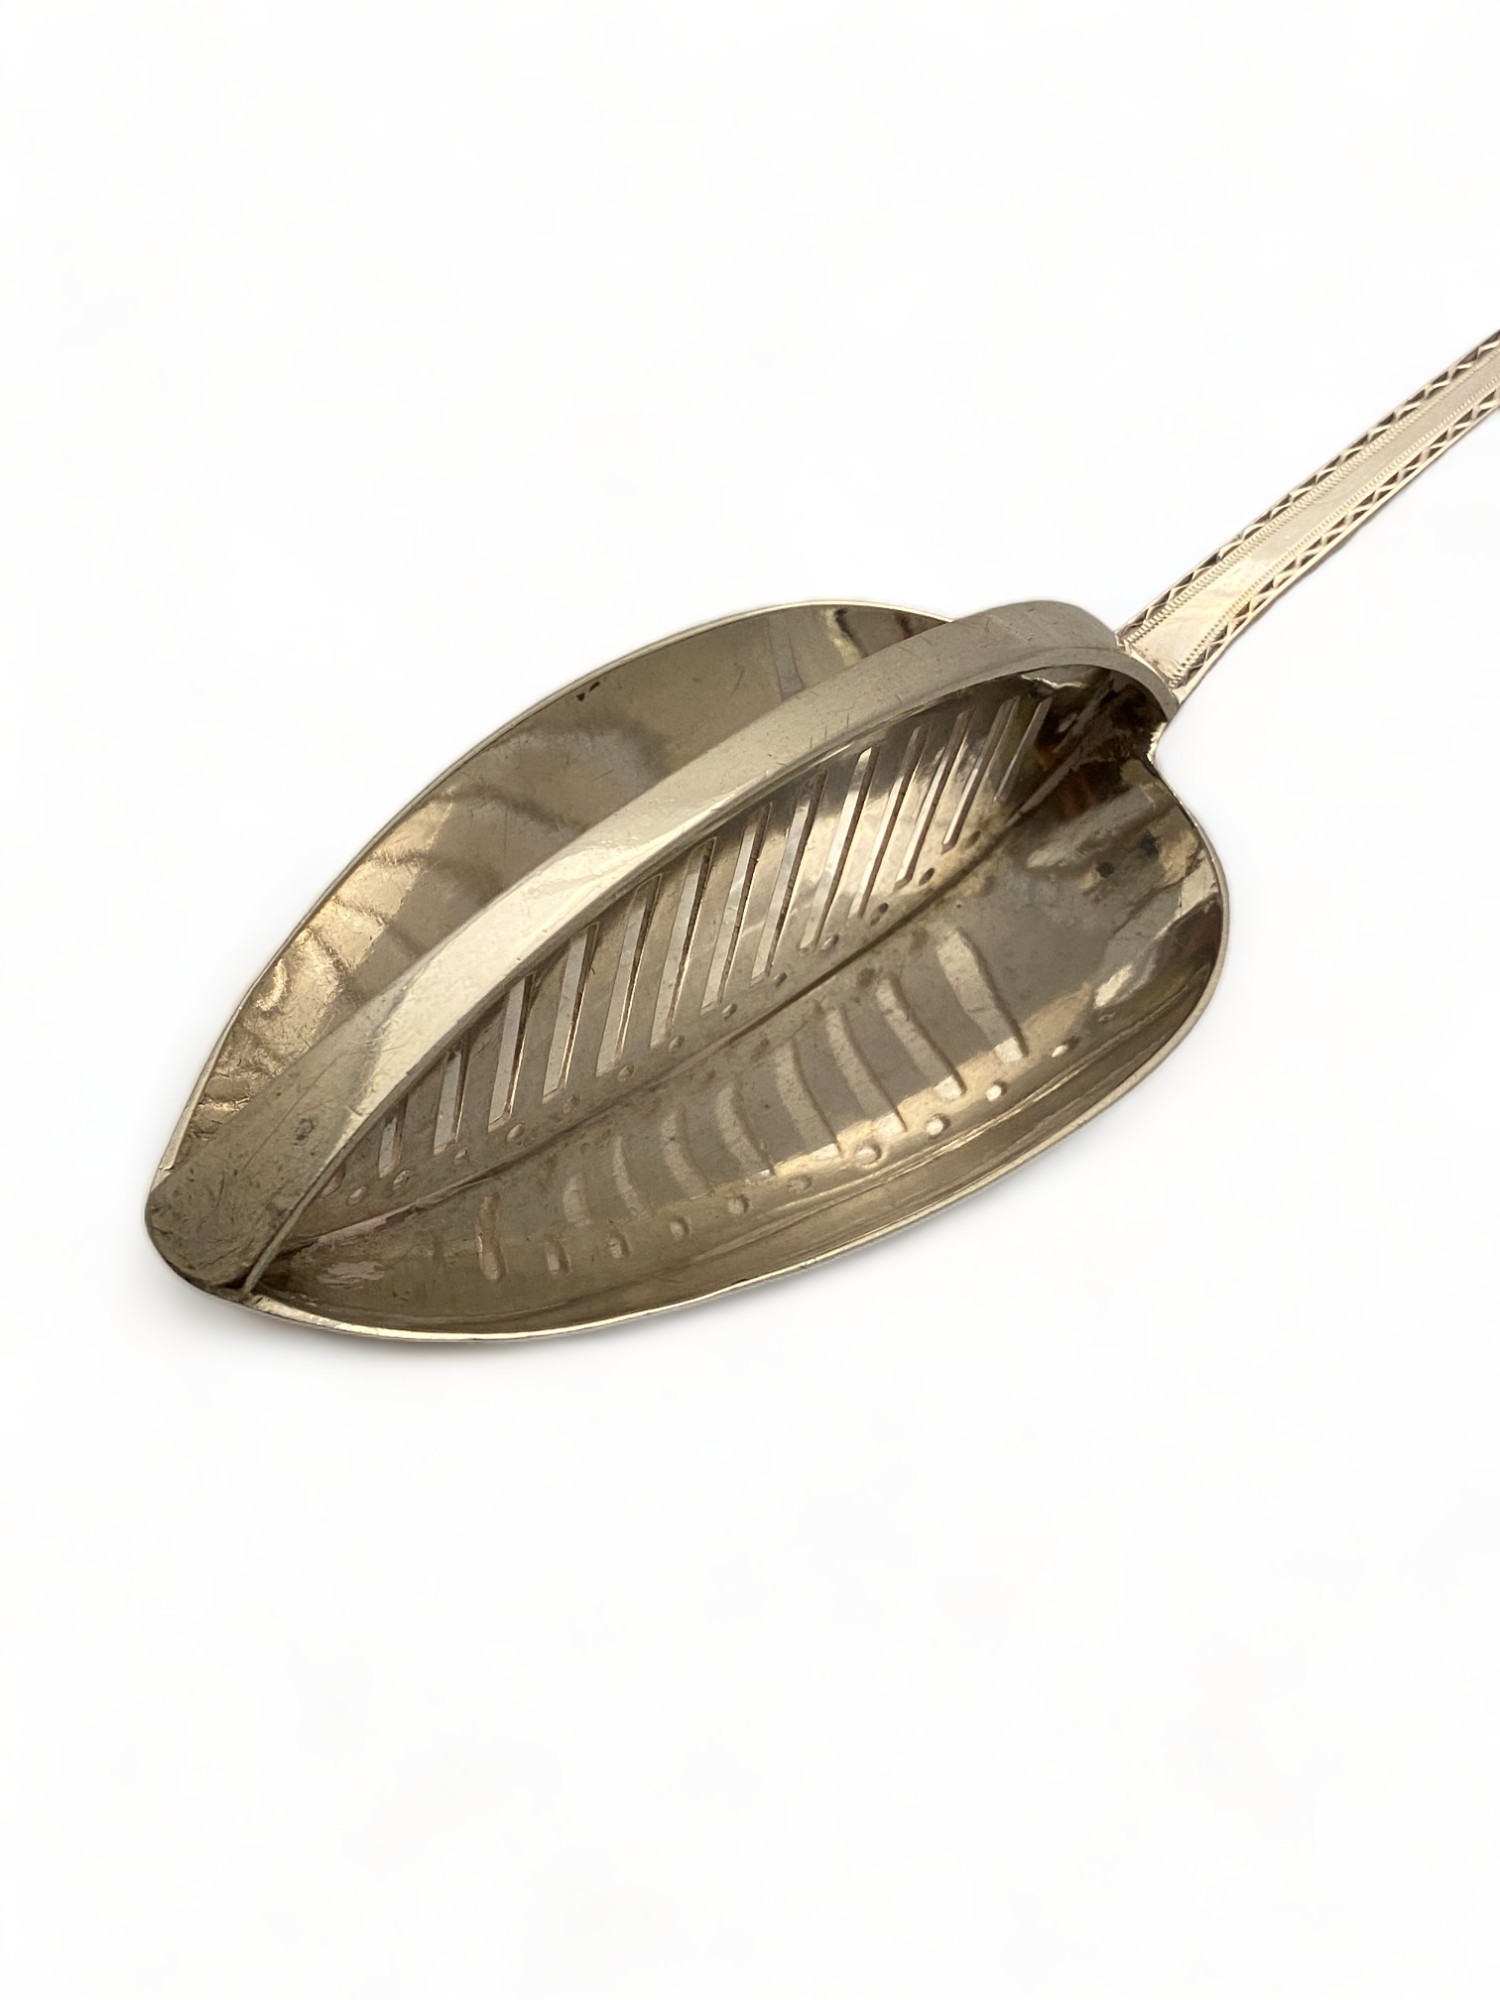 A fine George III century Irish silver divided straining spoon, James Bradie, Dublin, 1797 - Image 2 of 7